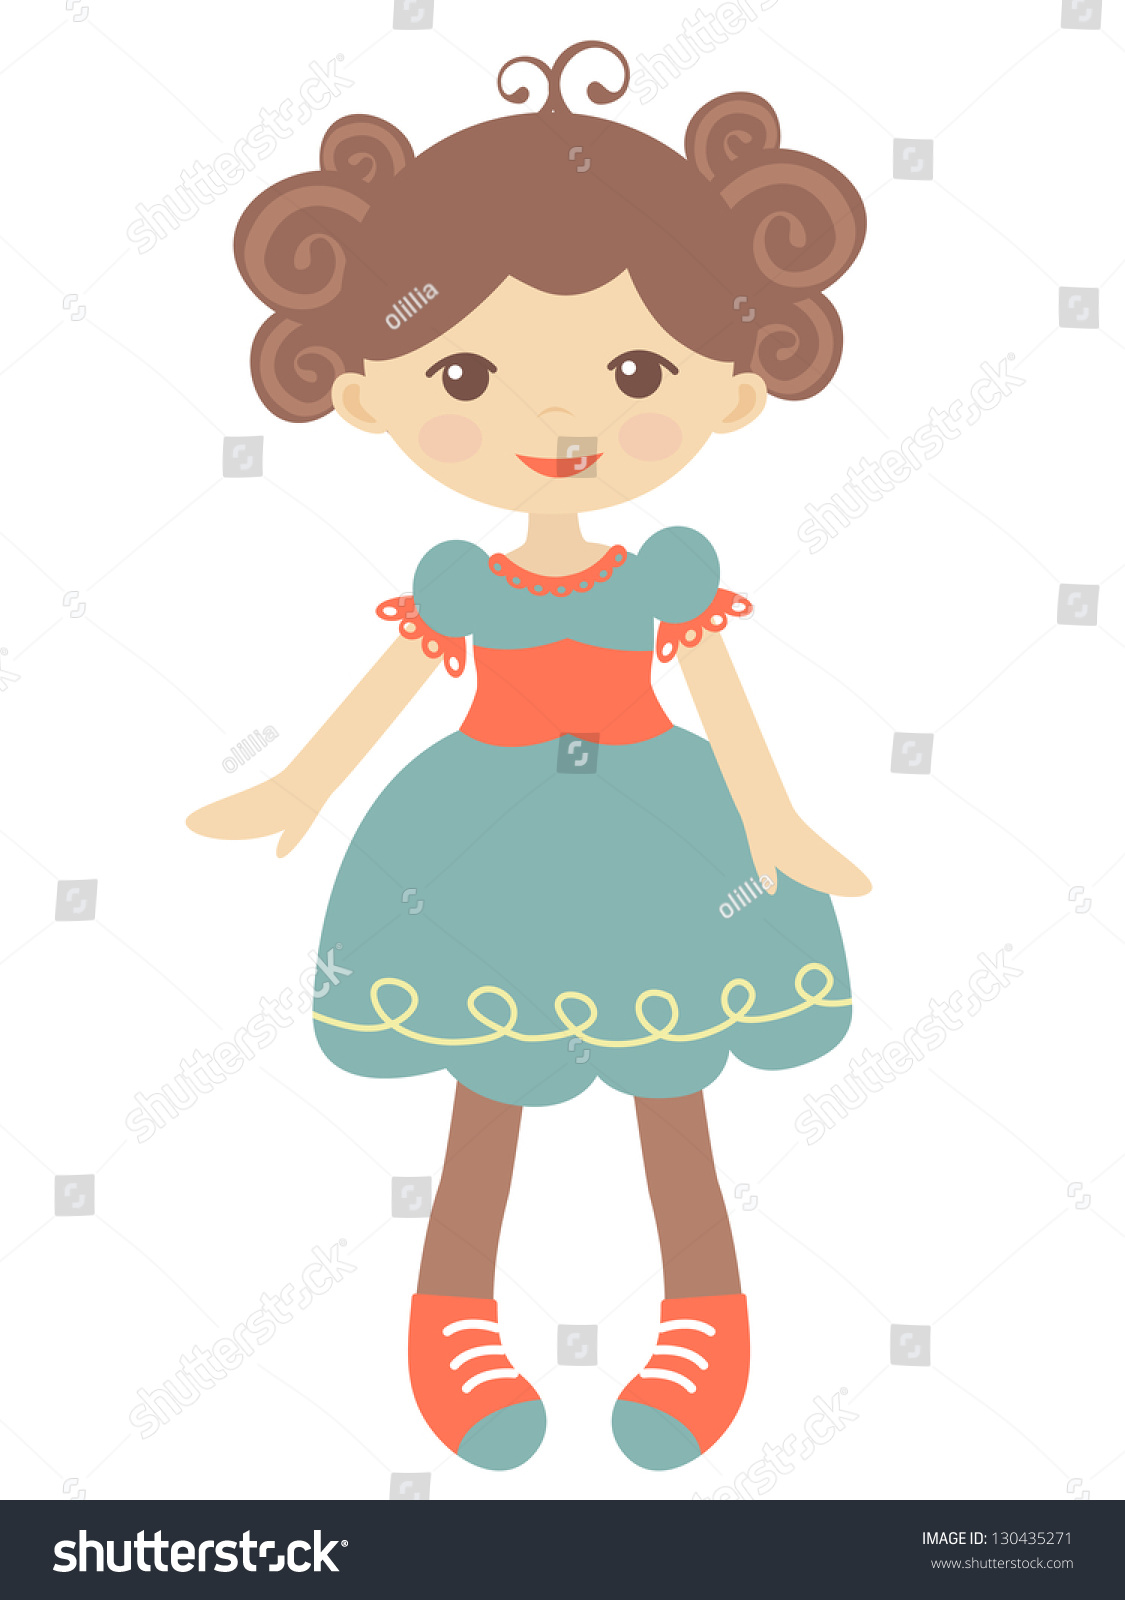 An Illustration Of Cute Rag Doll - 130435271 : Shutterstock